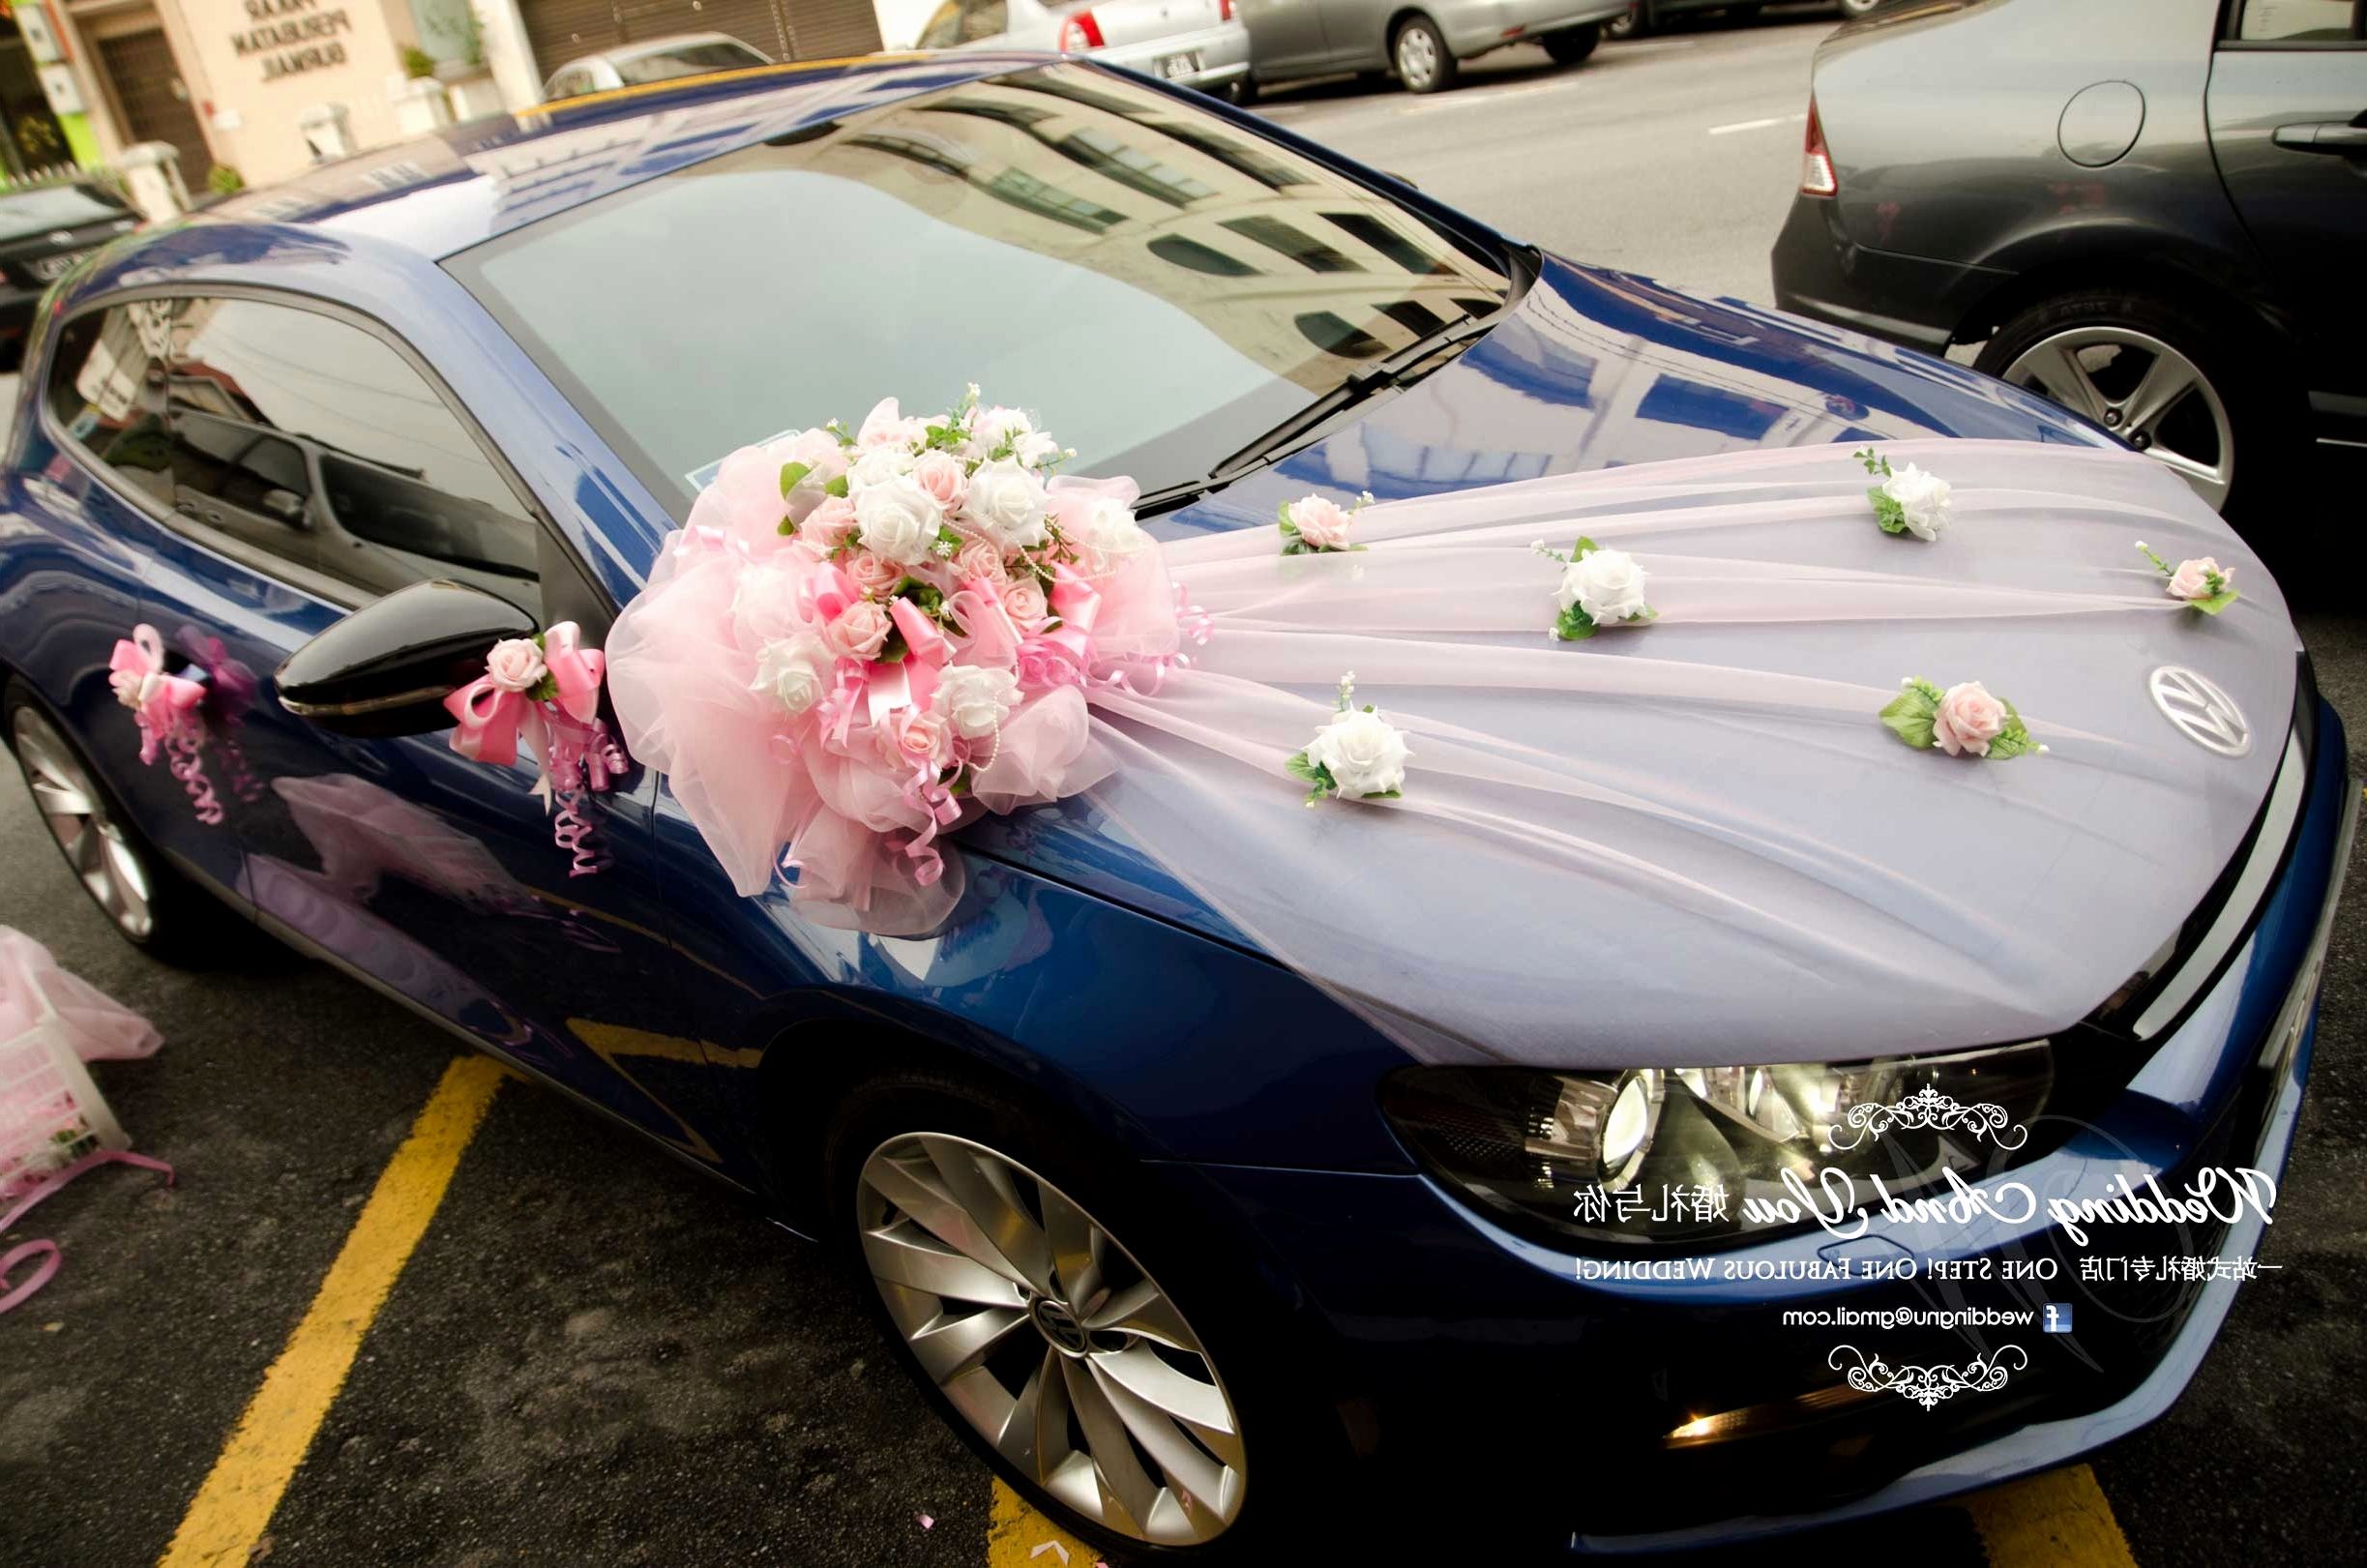 Wedding Decorations For Car Spring